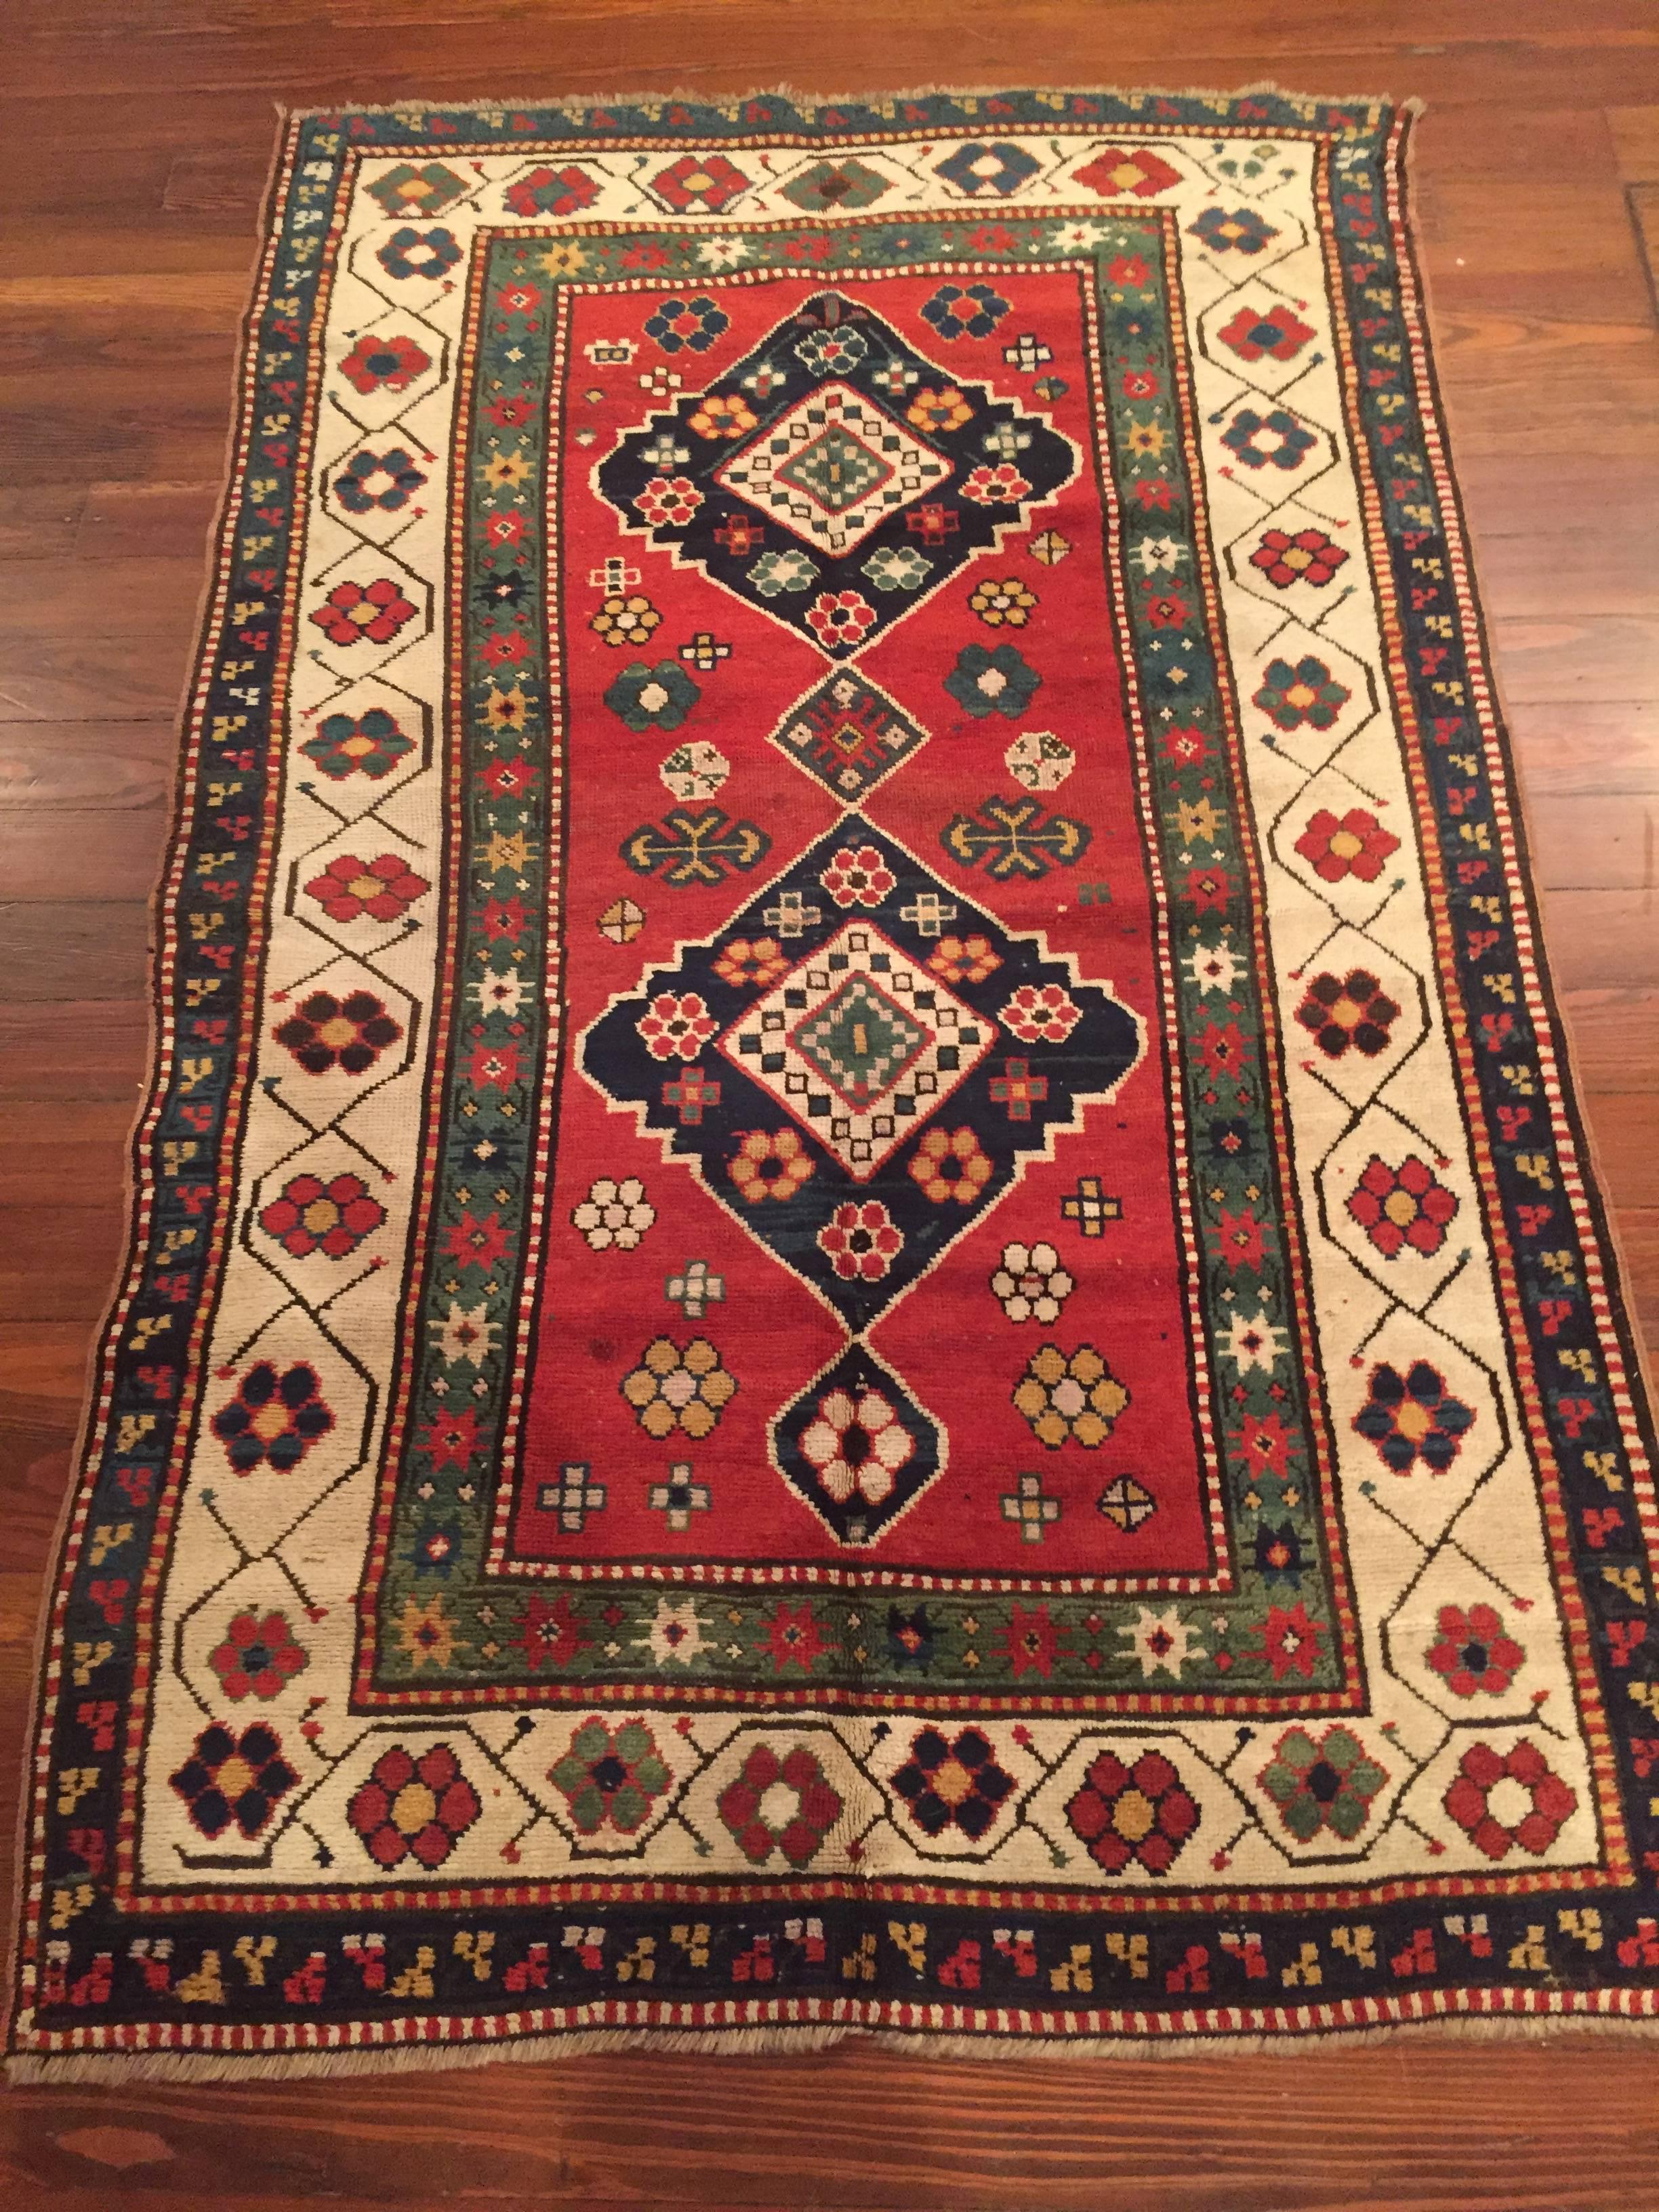 An antique Caucasian Kazak rug, circa 1890.